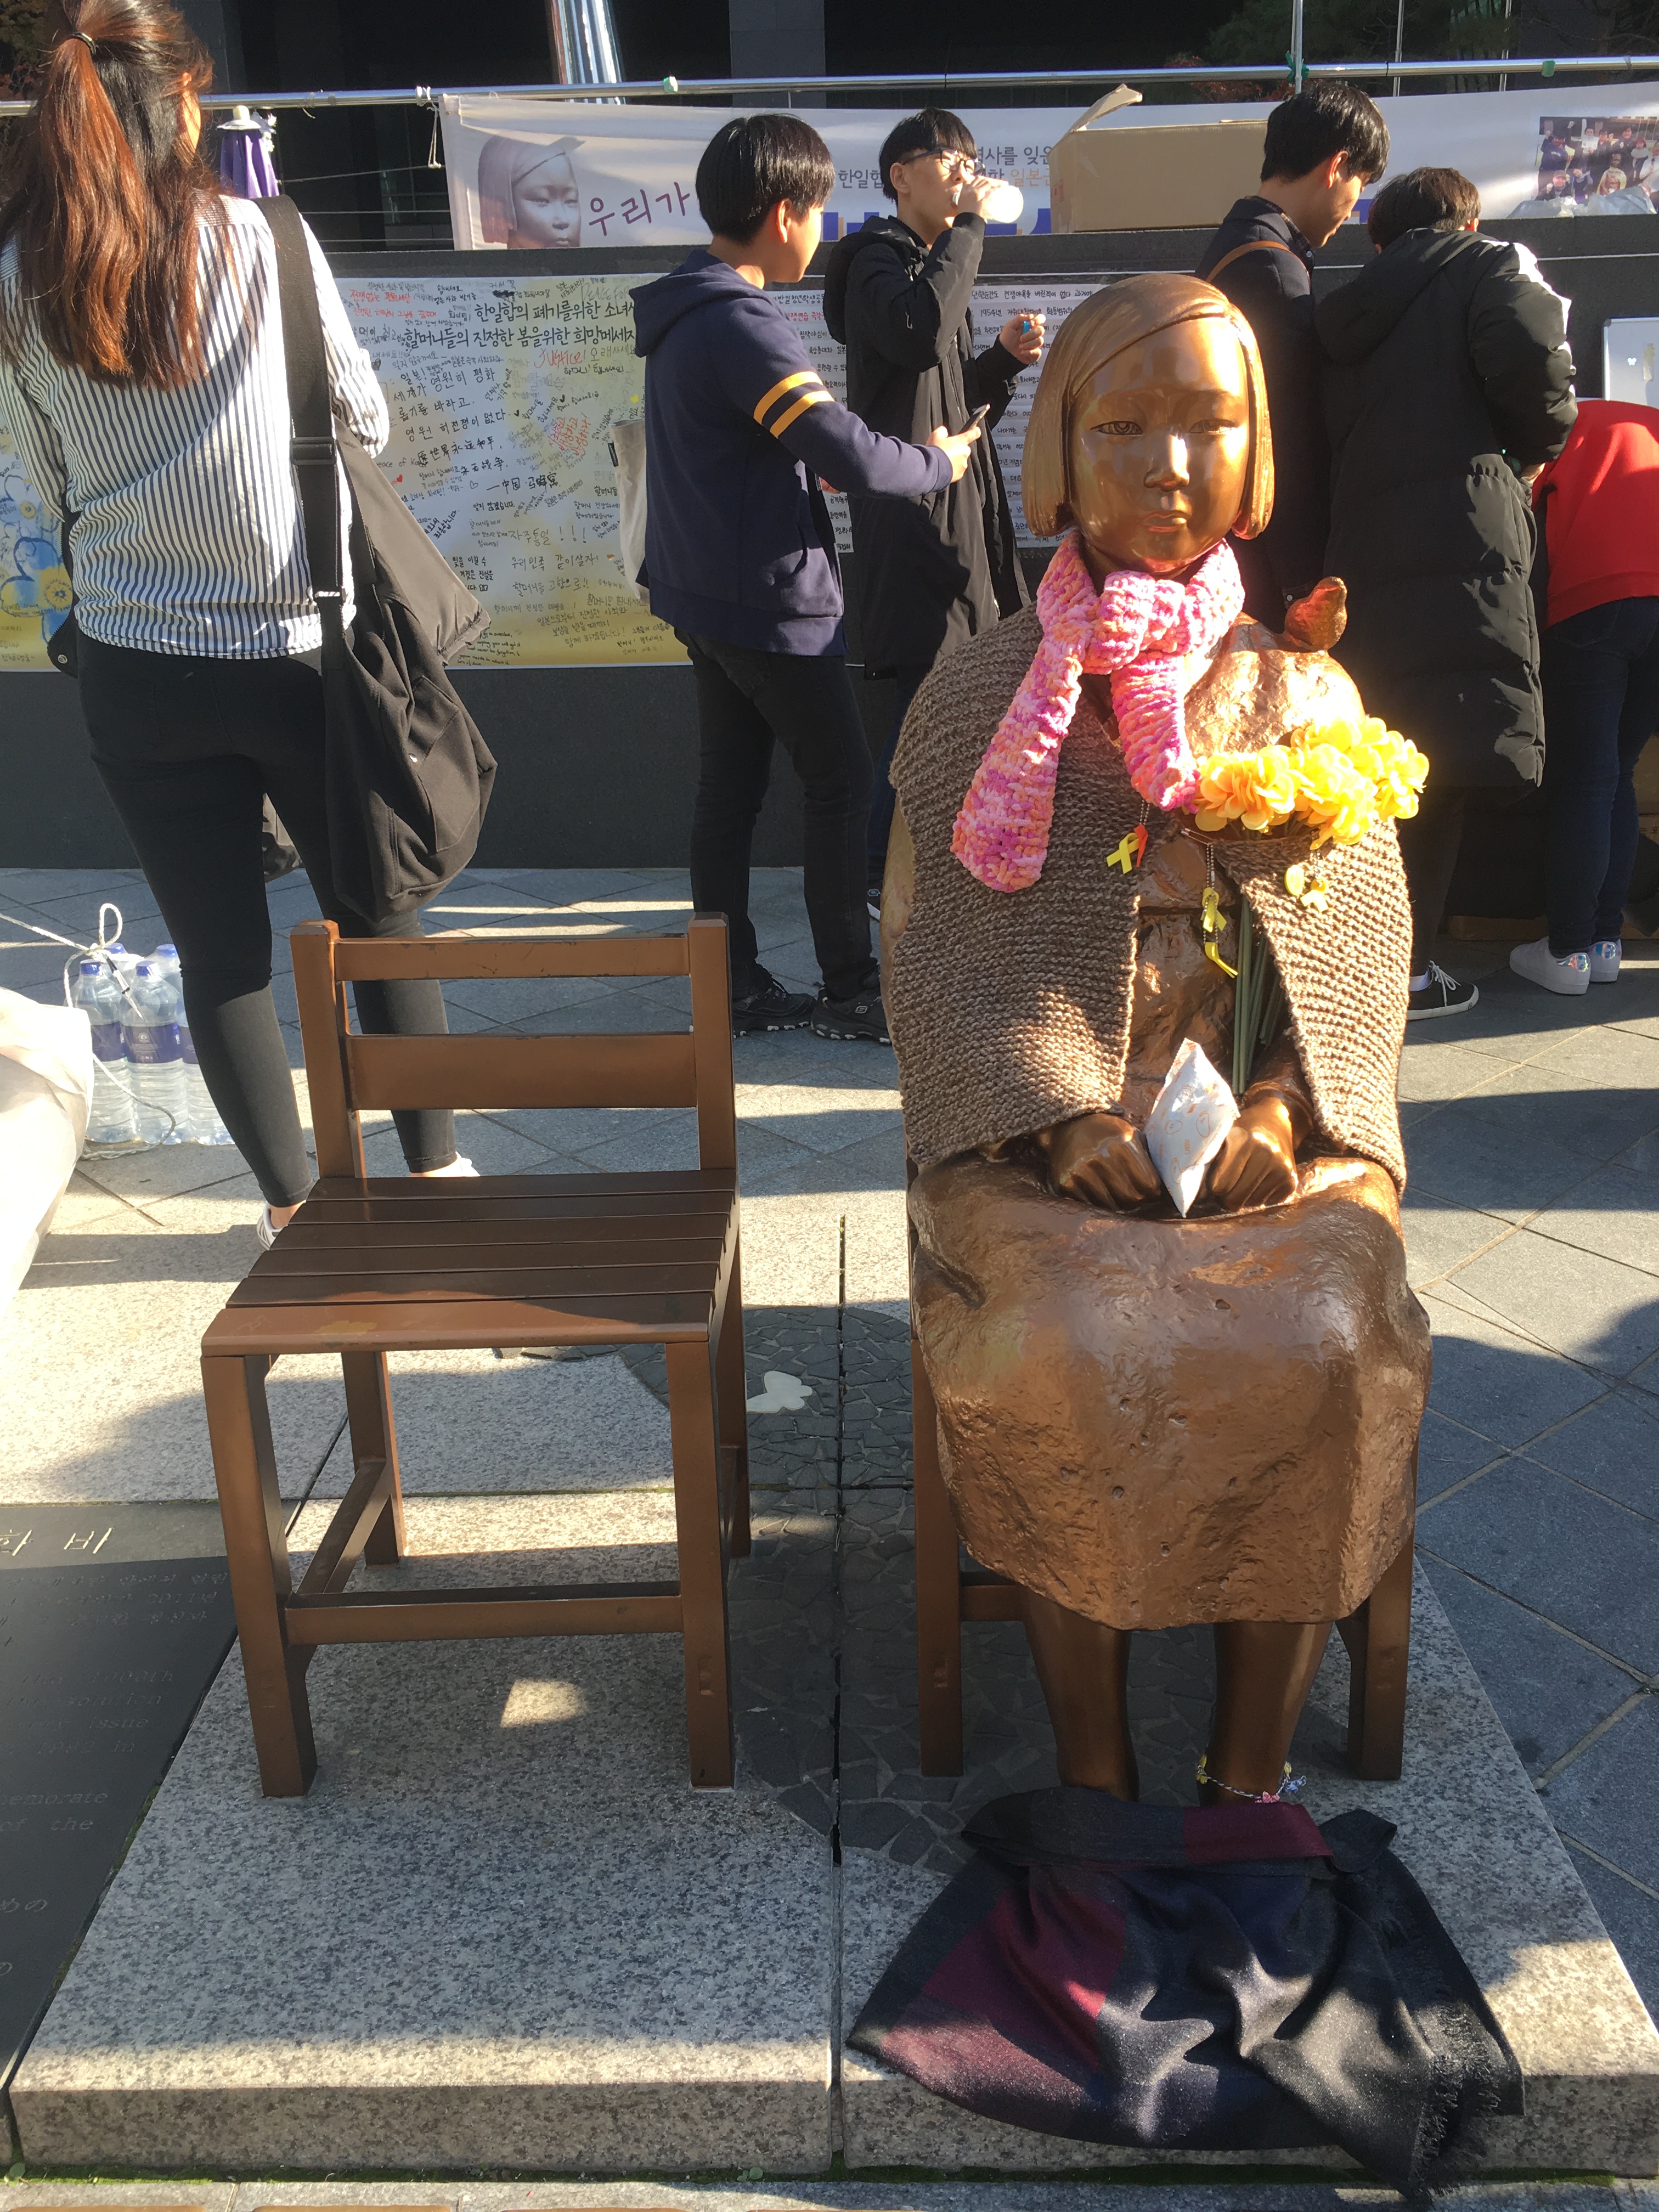 First 'comfort women' statue in Seoul (H K Lee, Nov 2018)